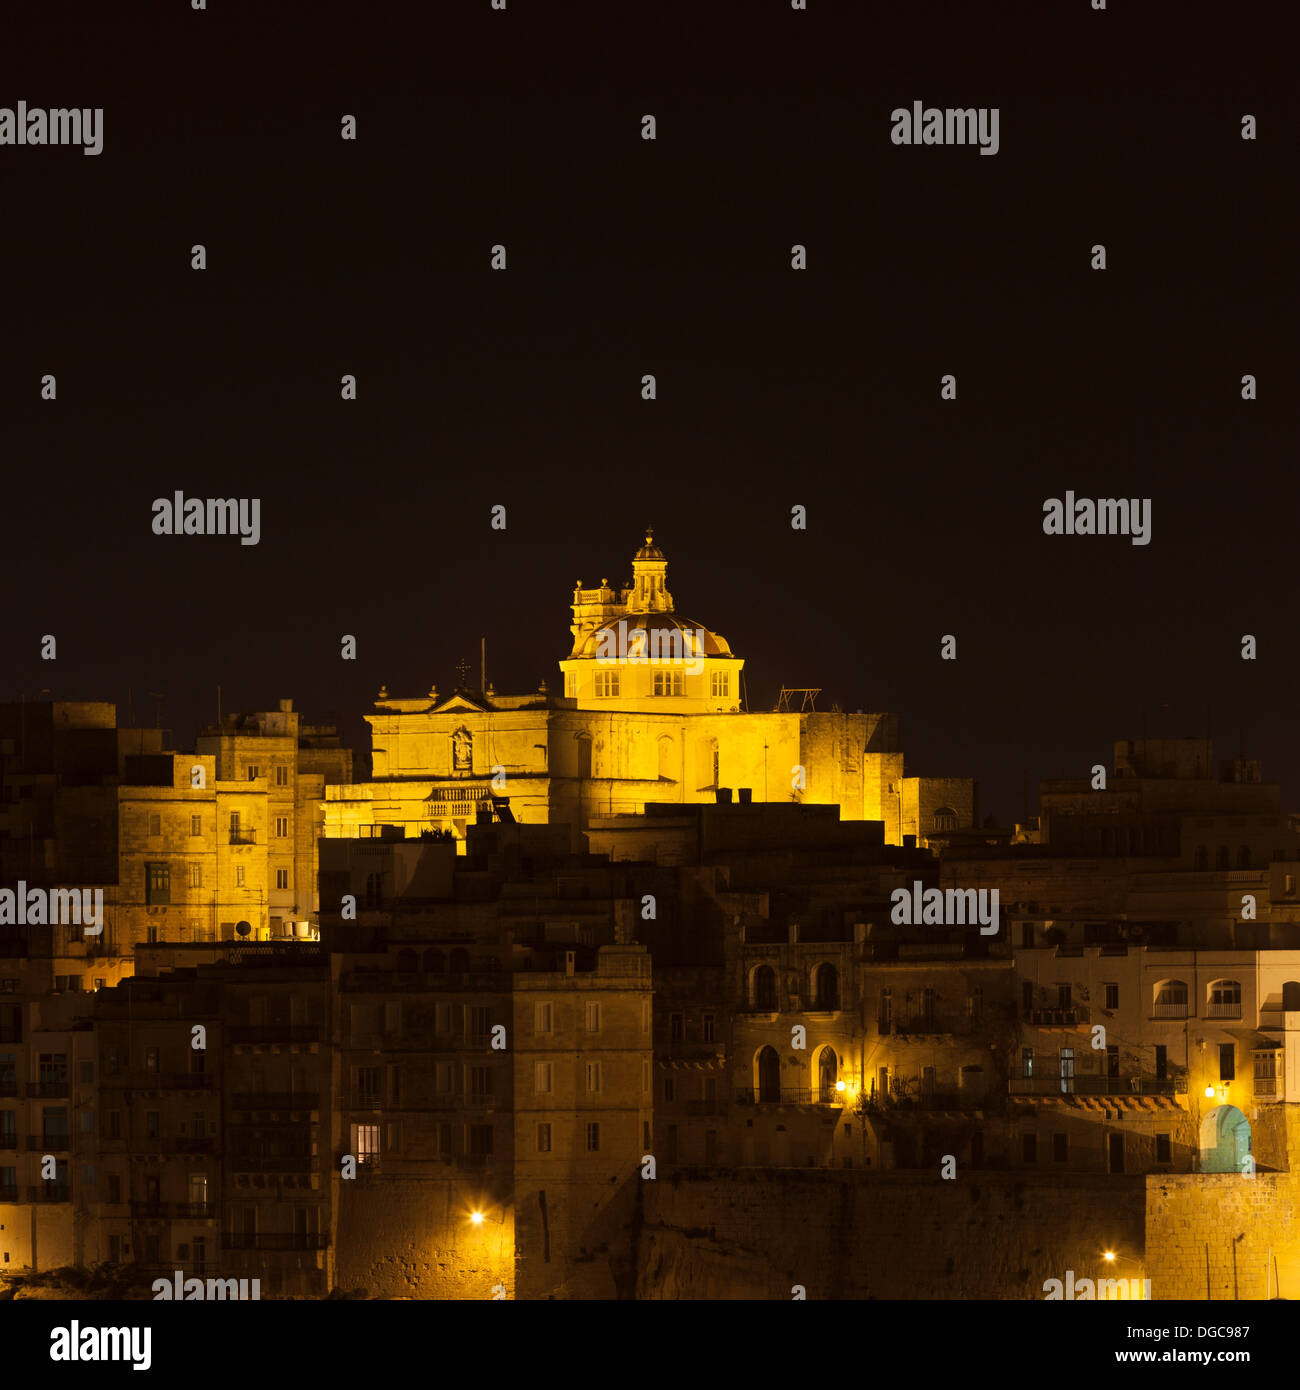 St Philip's Church over city at night, Senglea, Malta Stock Photo